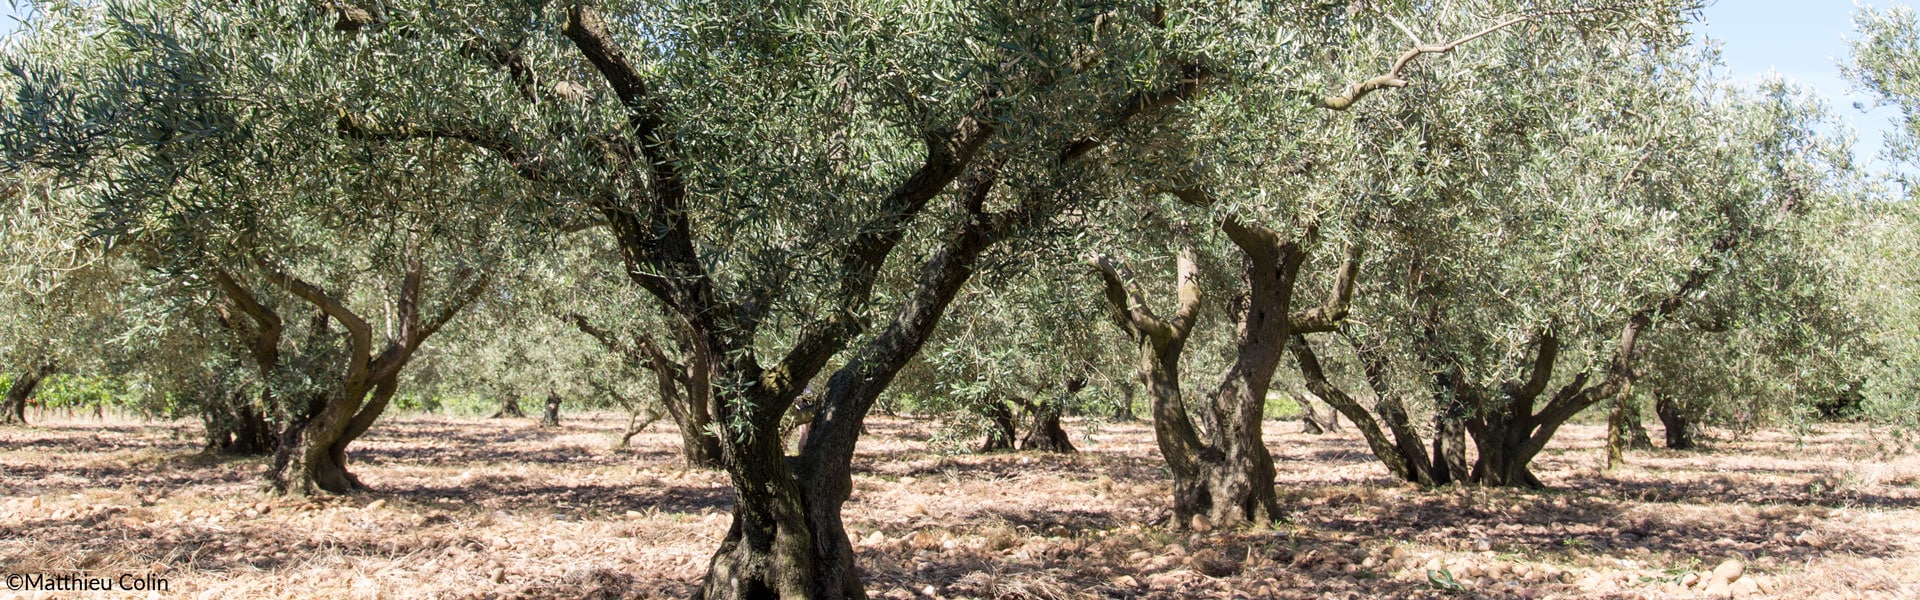 Maisondeshuilesetolives, accueil, champ d'olivier